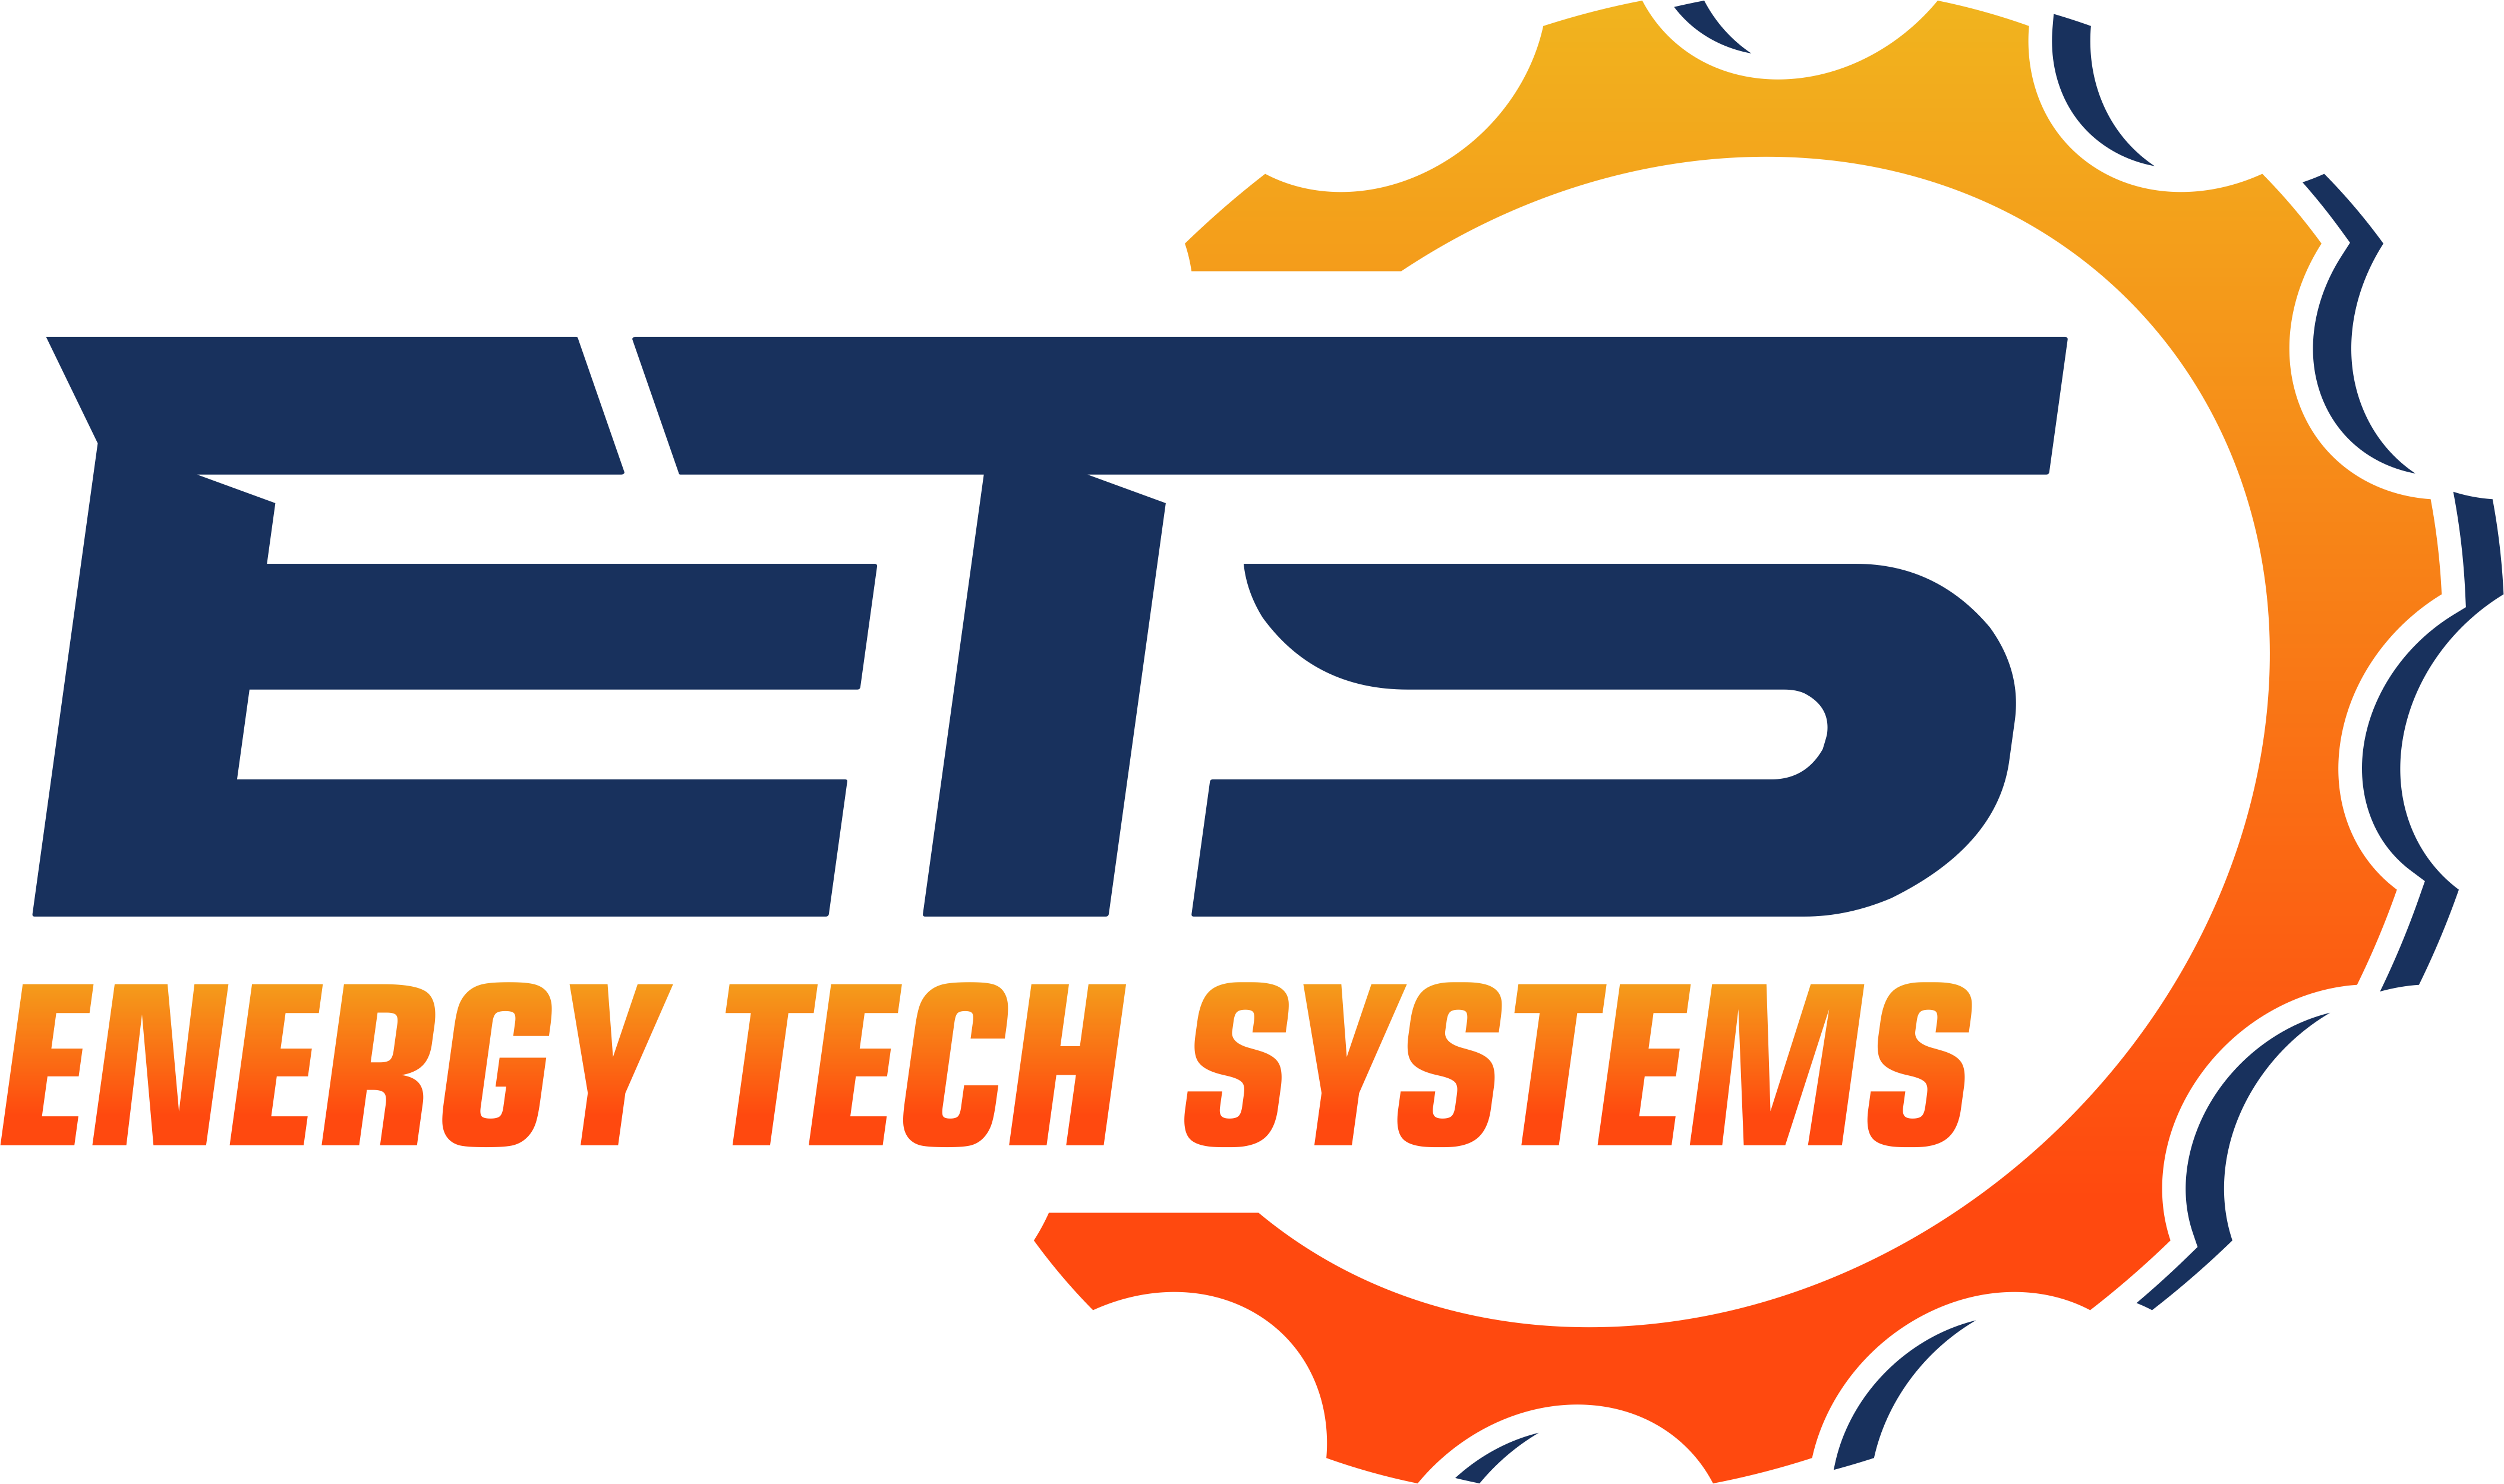 Energy Tech Systems